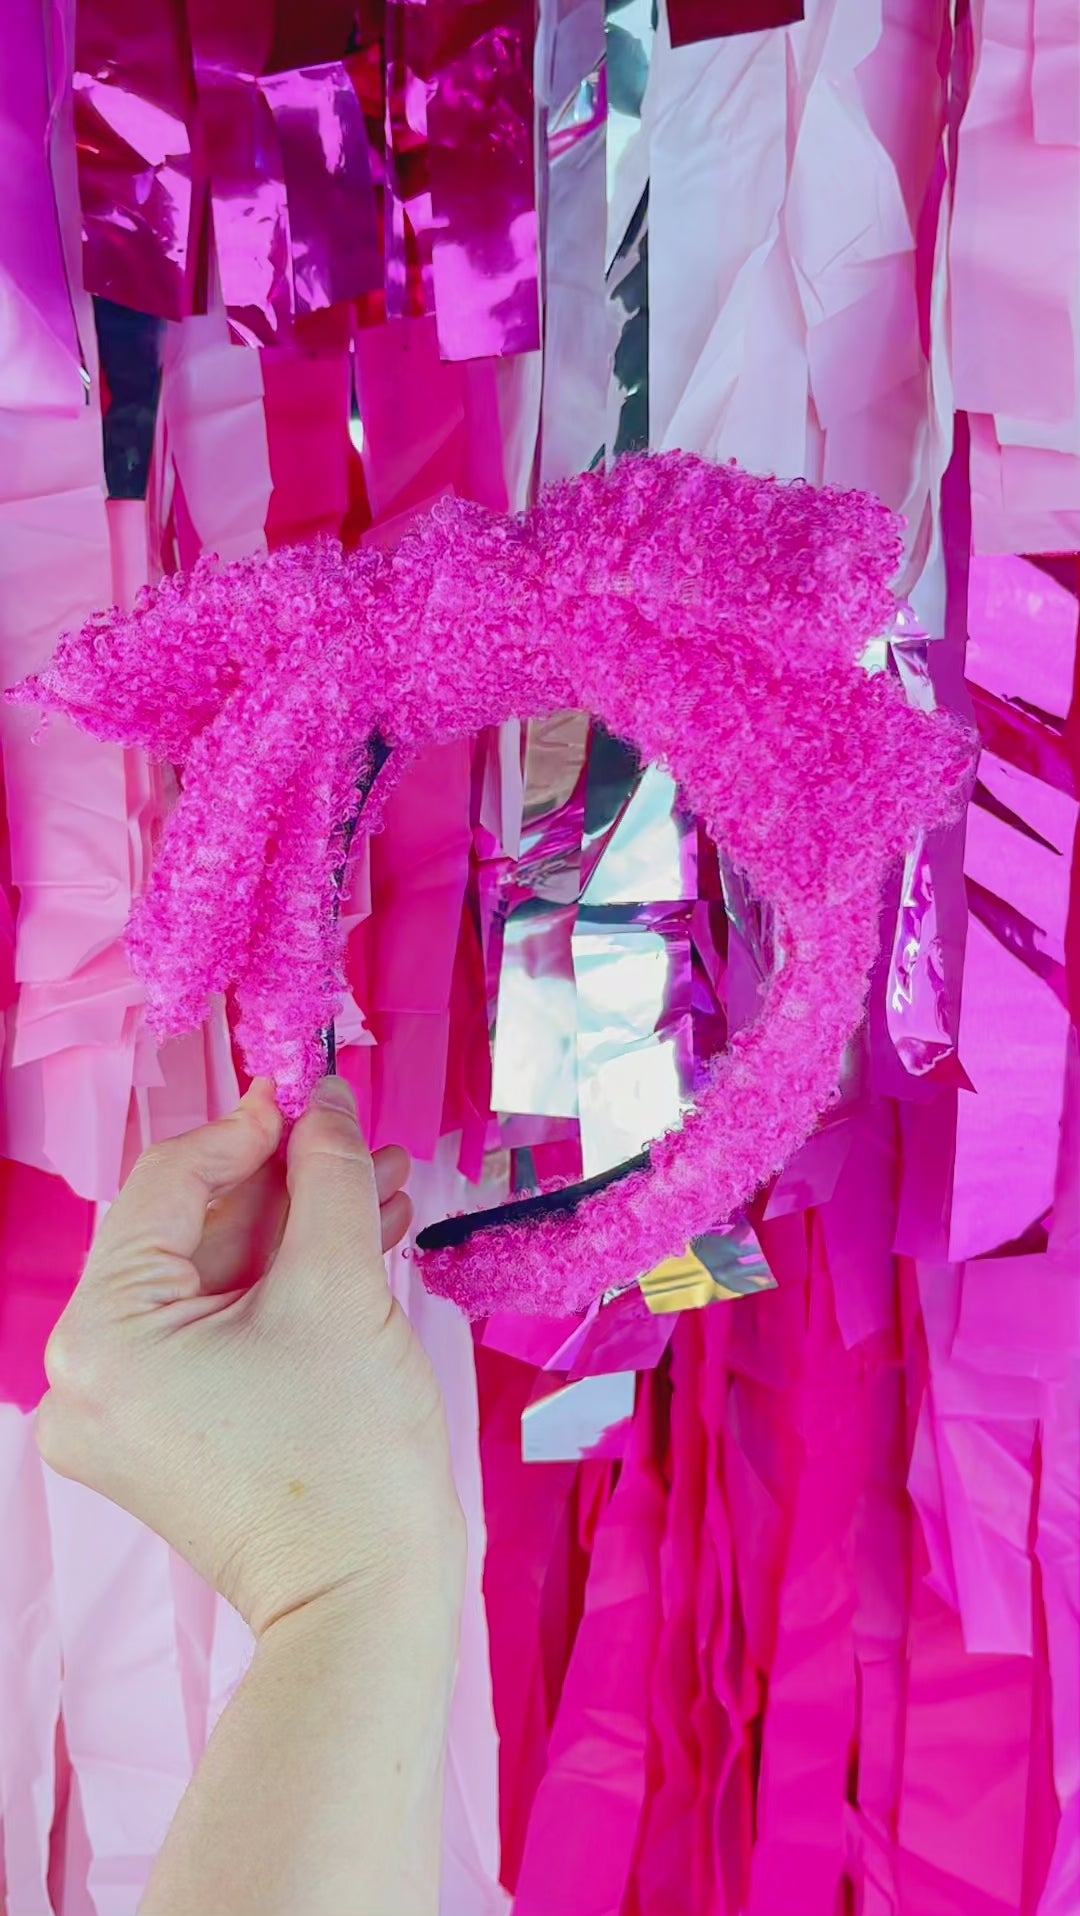 Child Size Hot Pink Boucle Side Bow Headband